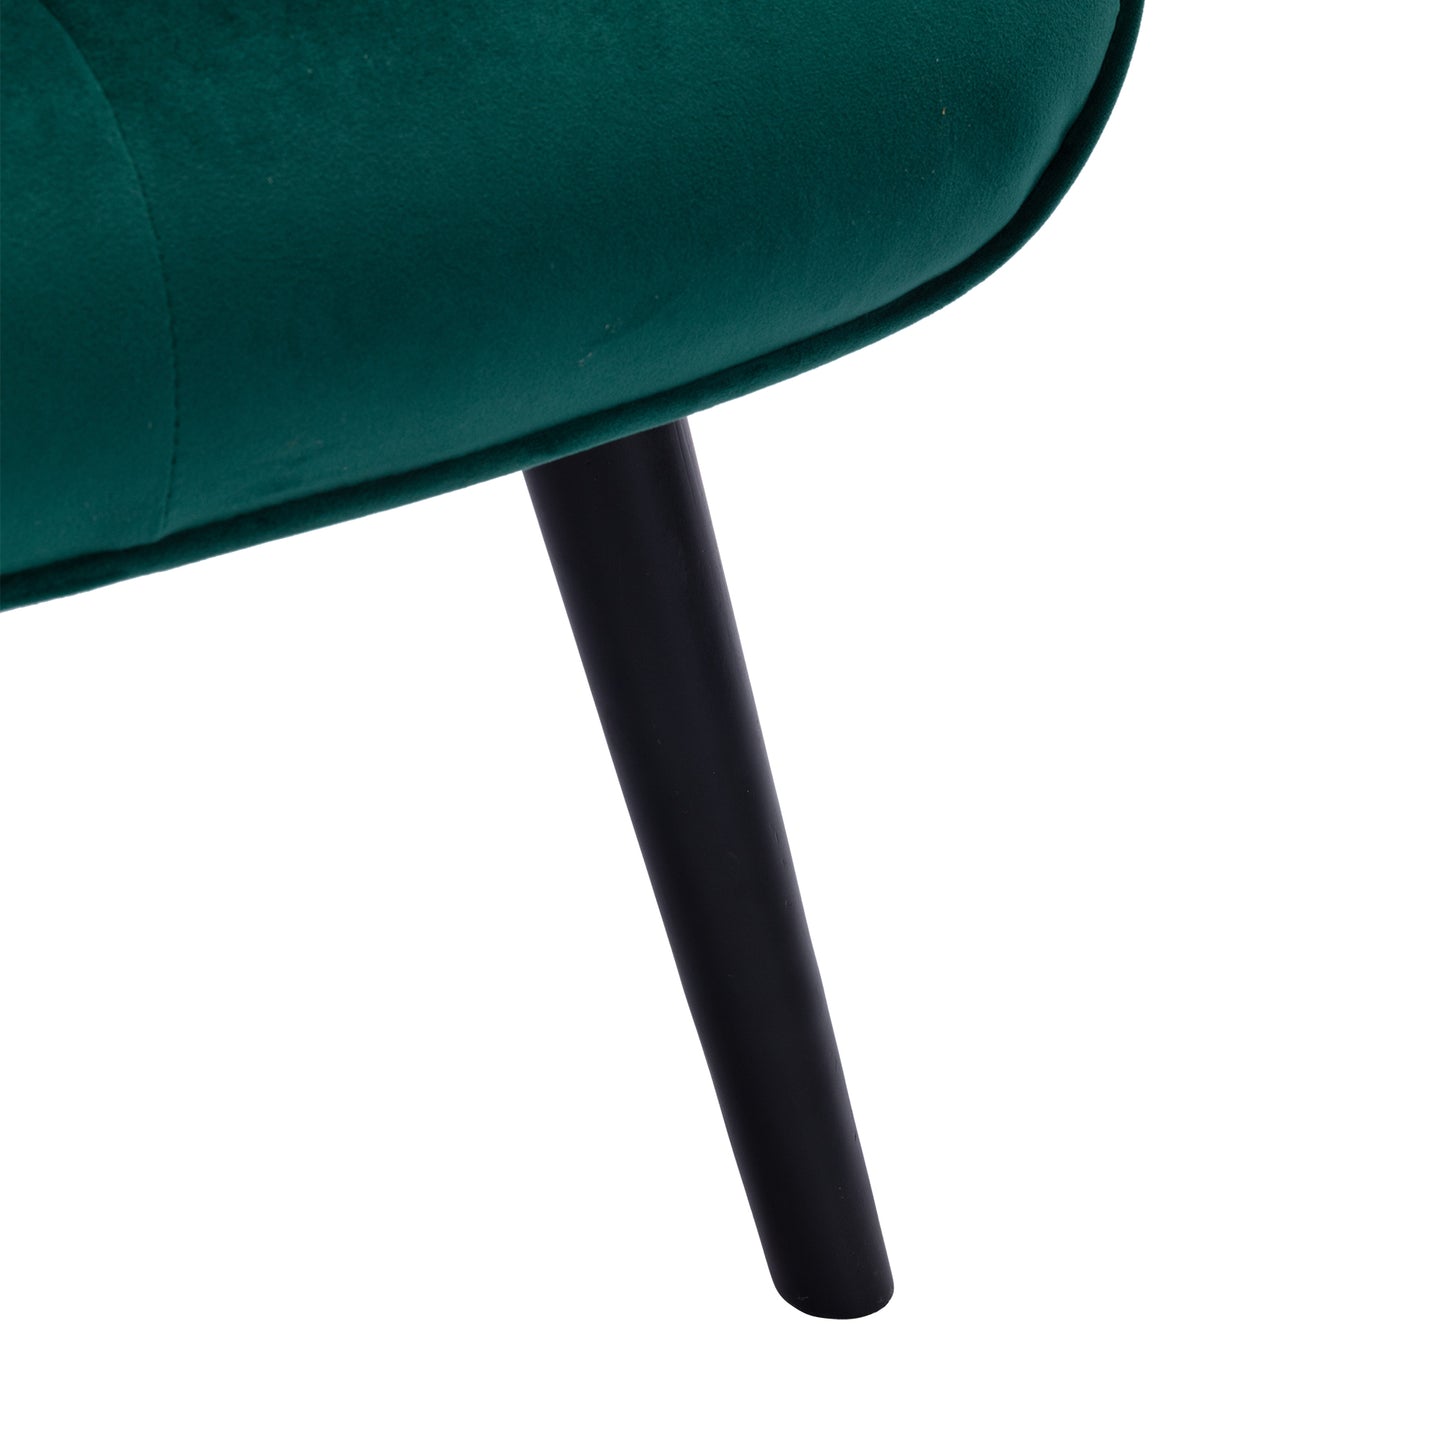 Accent chair LivingRoom/BedRoom,ModernLeisure Chair